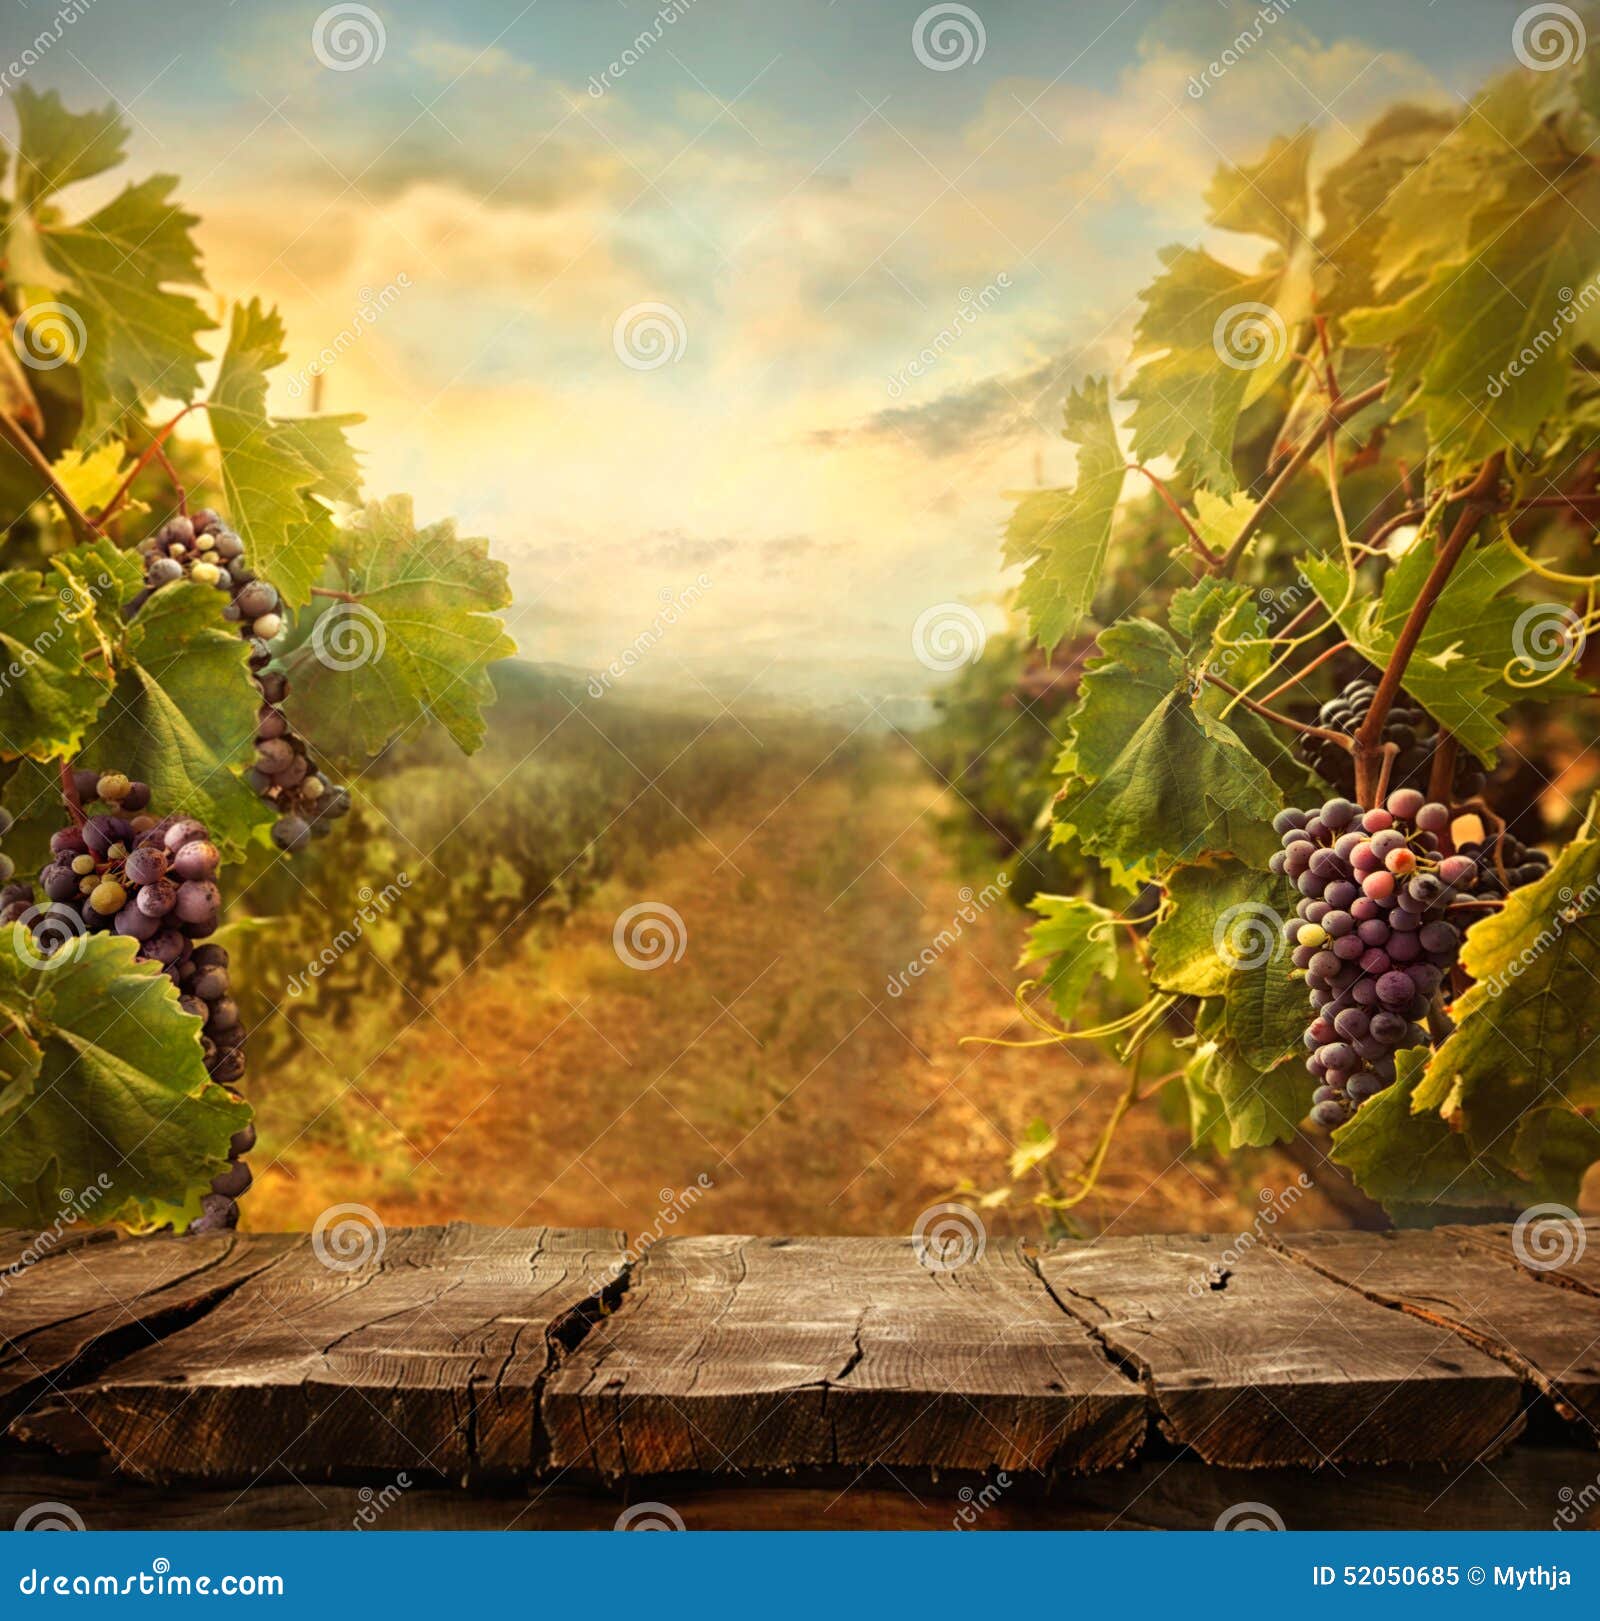 vineyard 